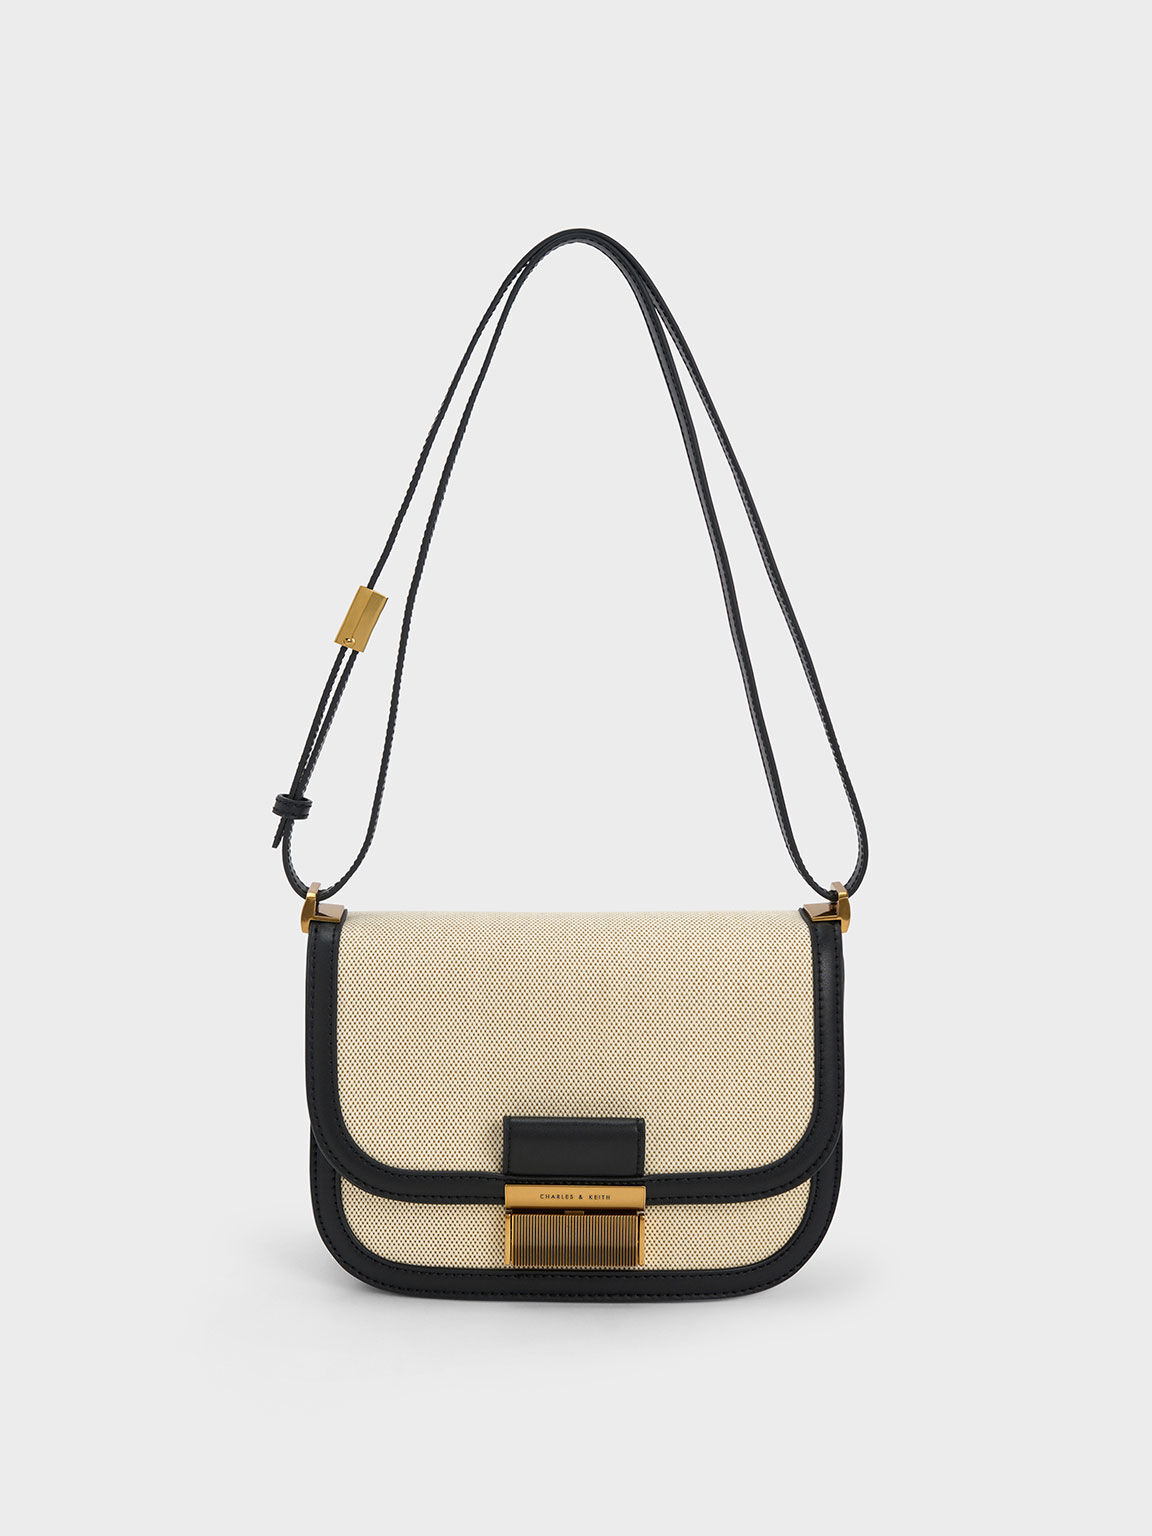 Mona B Handbags - Buy Mona B Handbags online in India